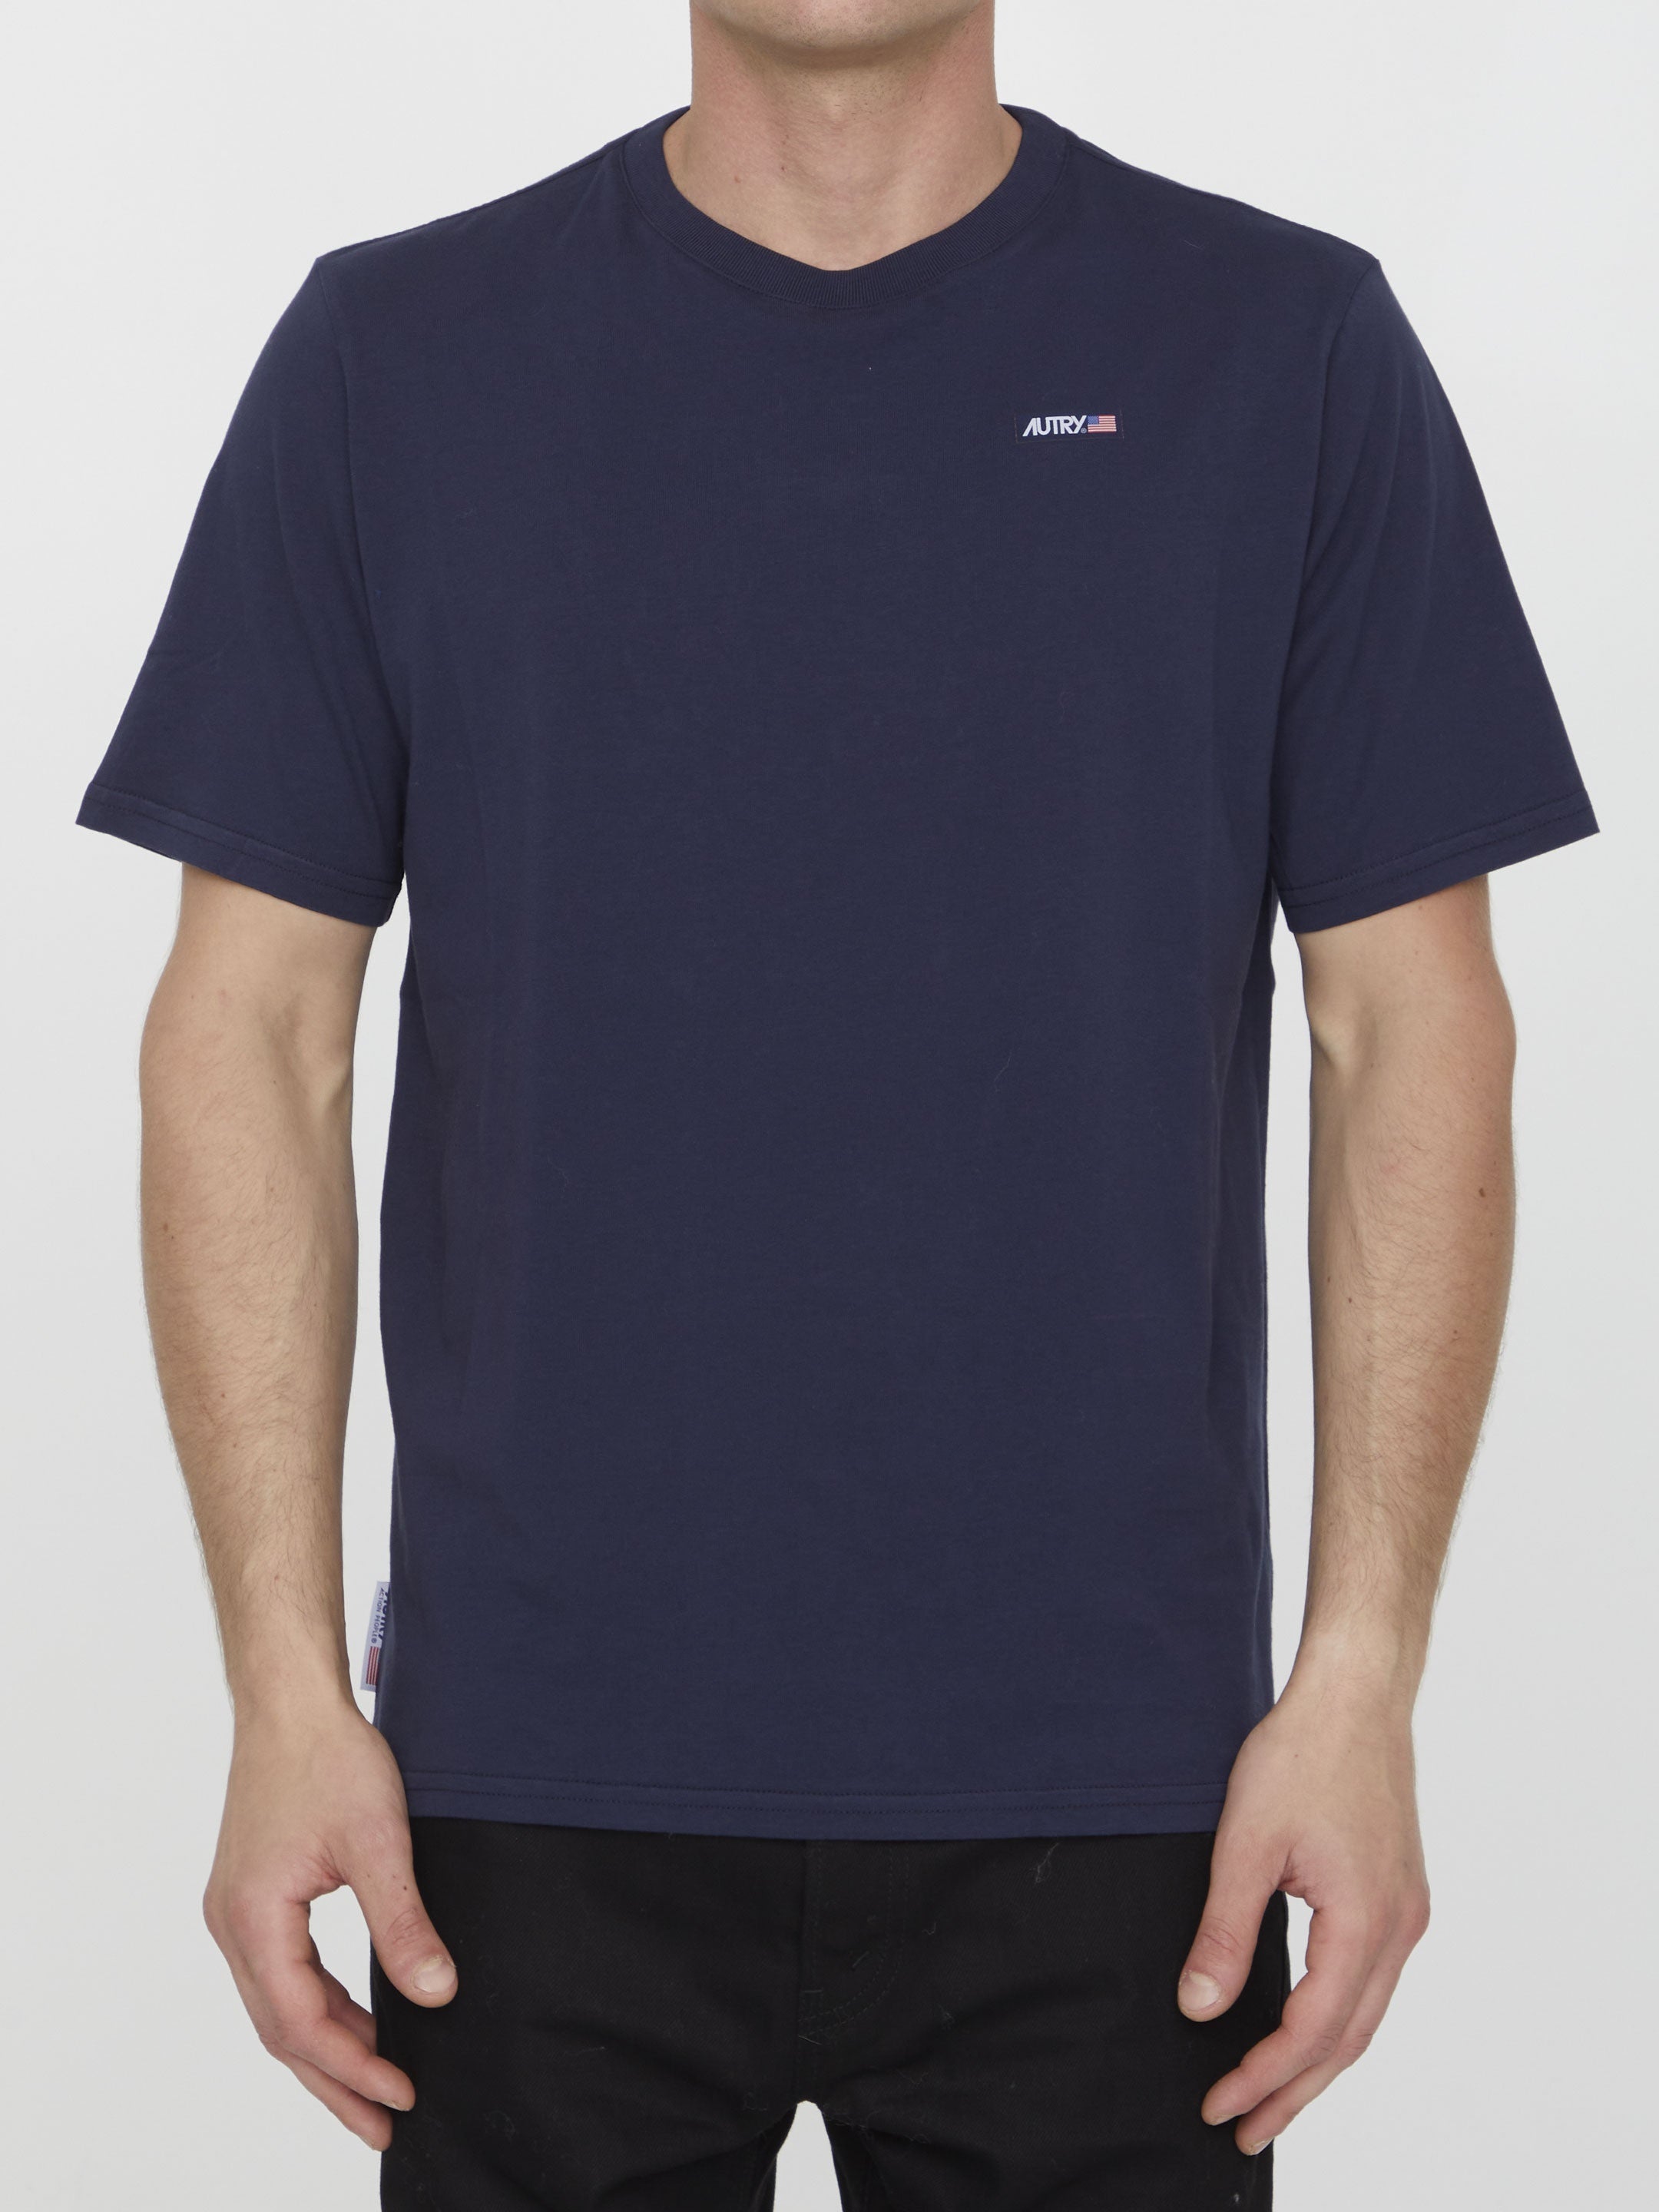 AUTRY-OUTLET-SALE-Cotton-t-shirt-with-logo-Shirts-L-BLUE-ARCHIVE-COLLECTION.jpg